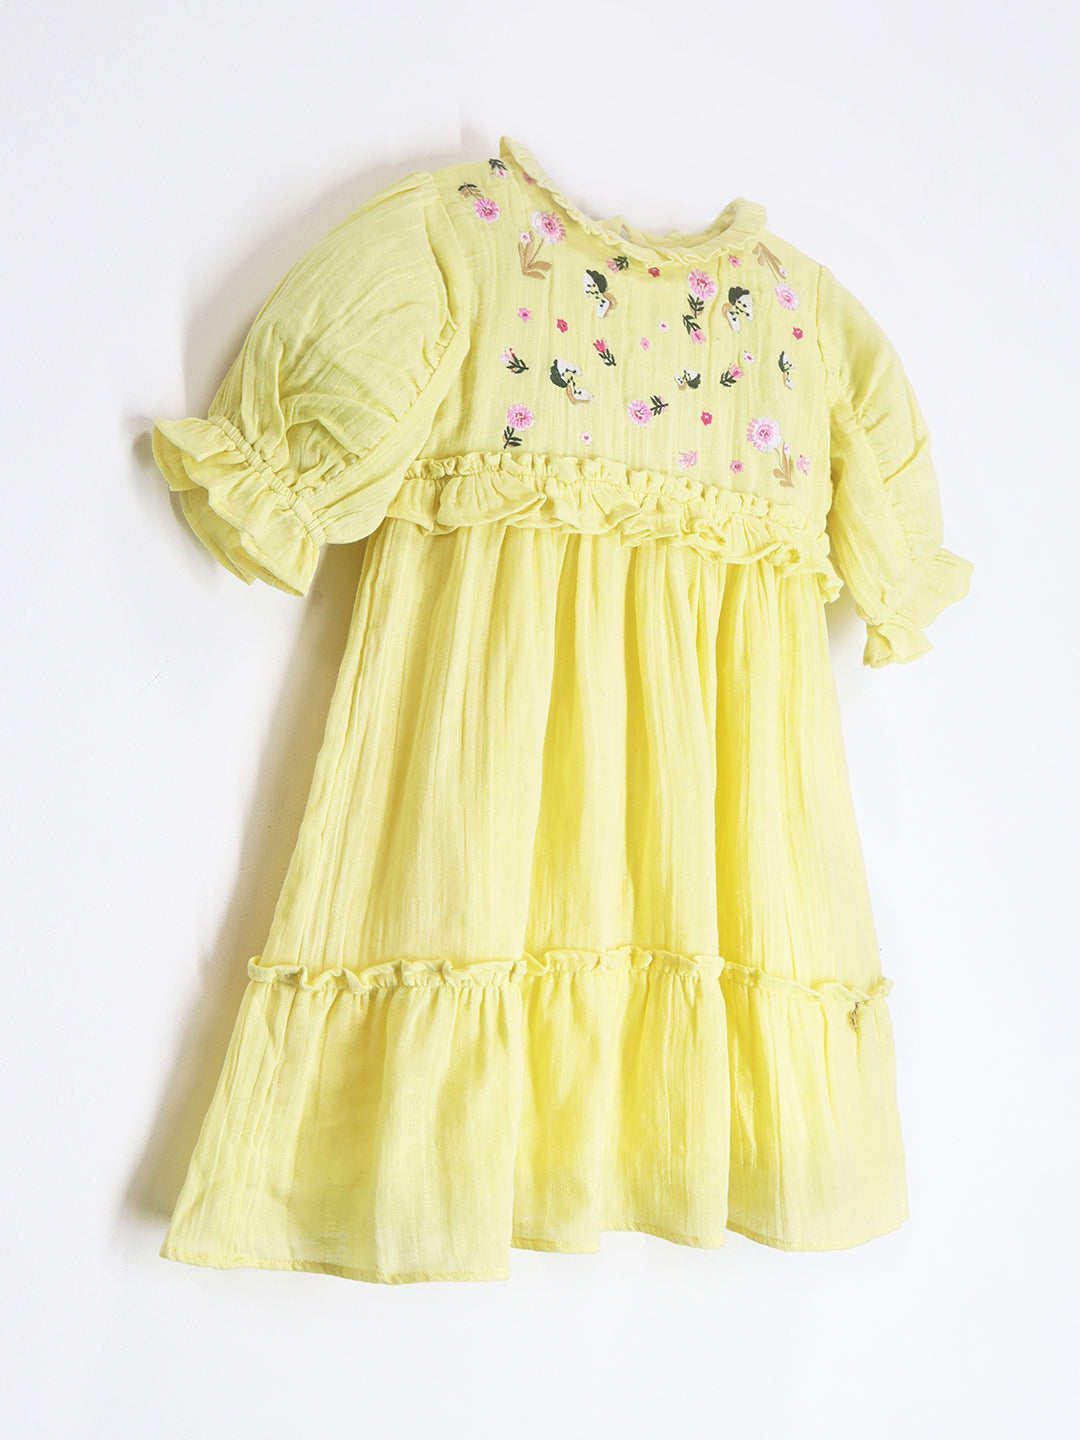 Dazzle Yellow Dress